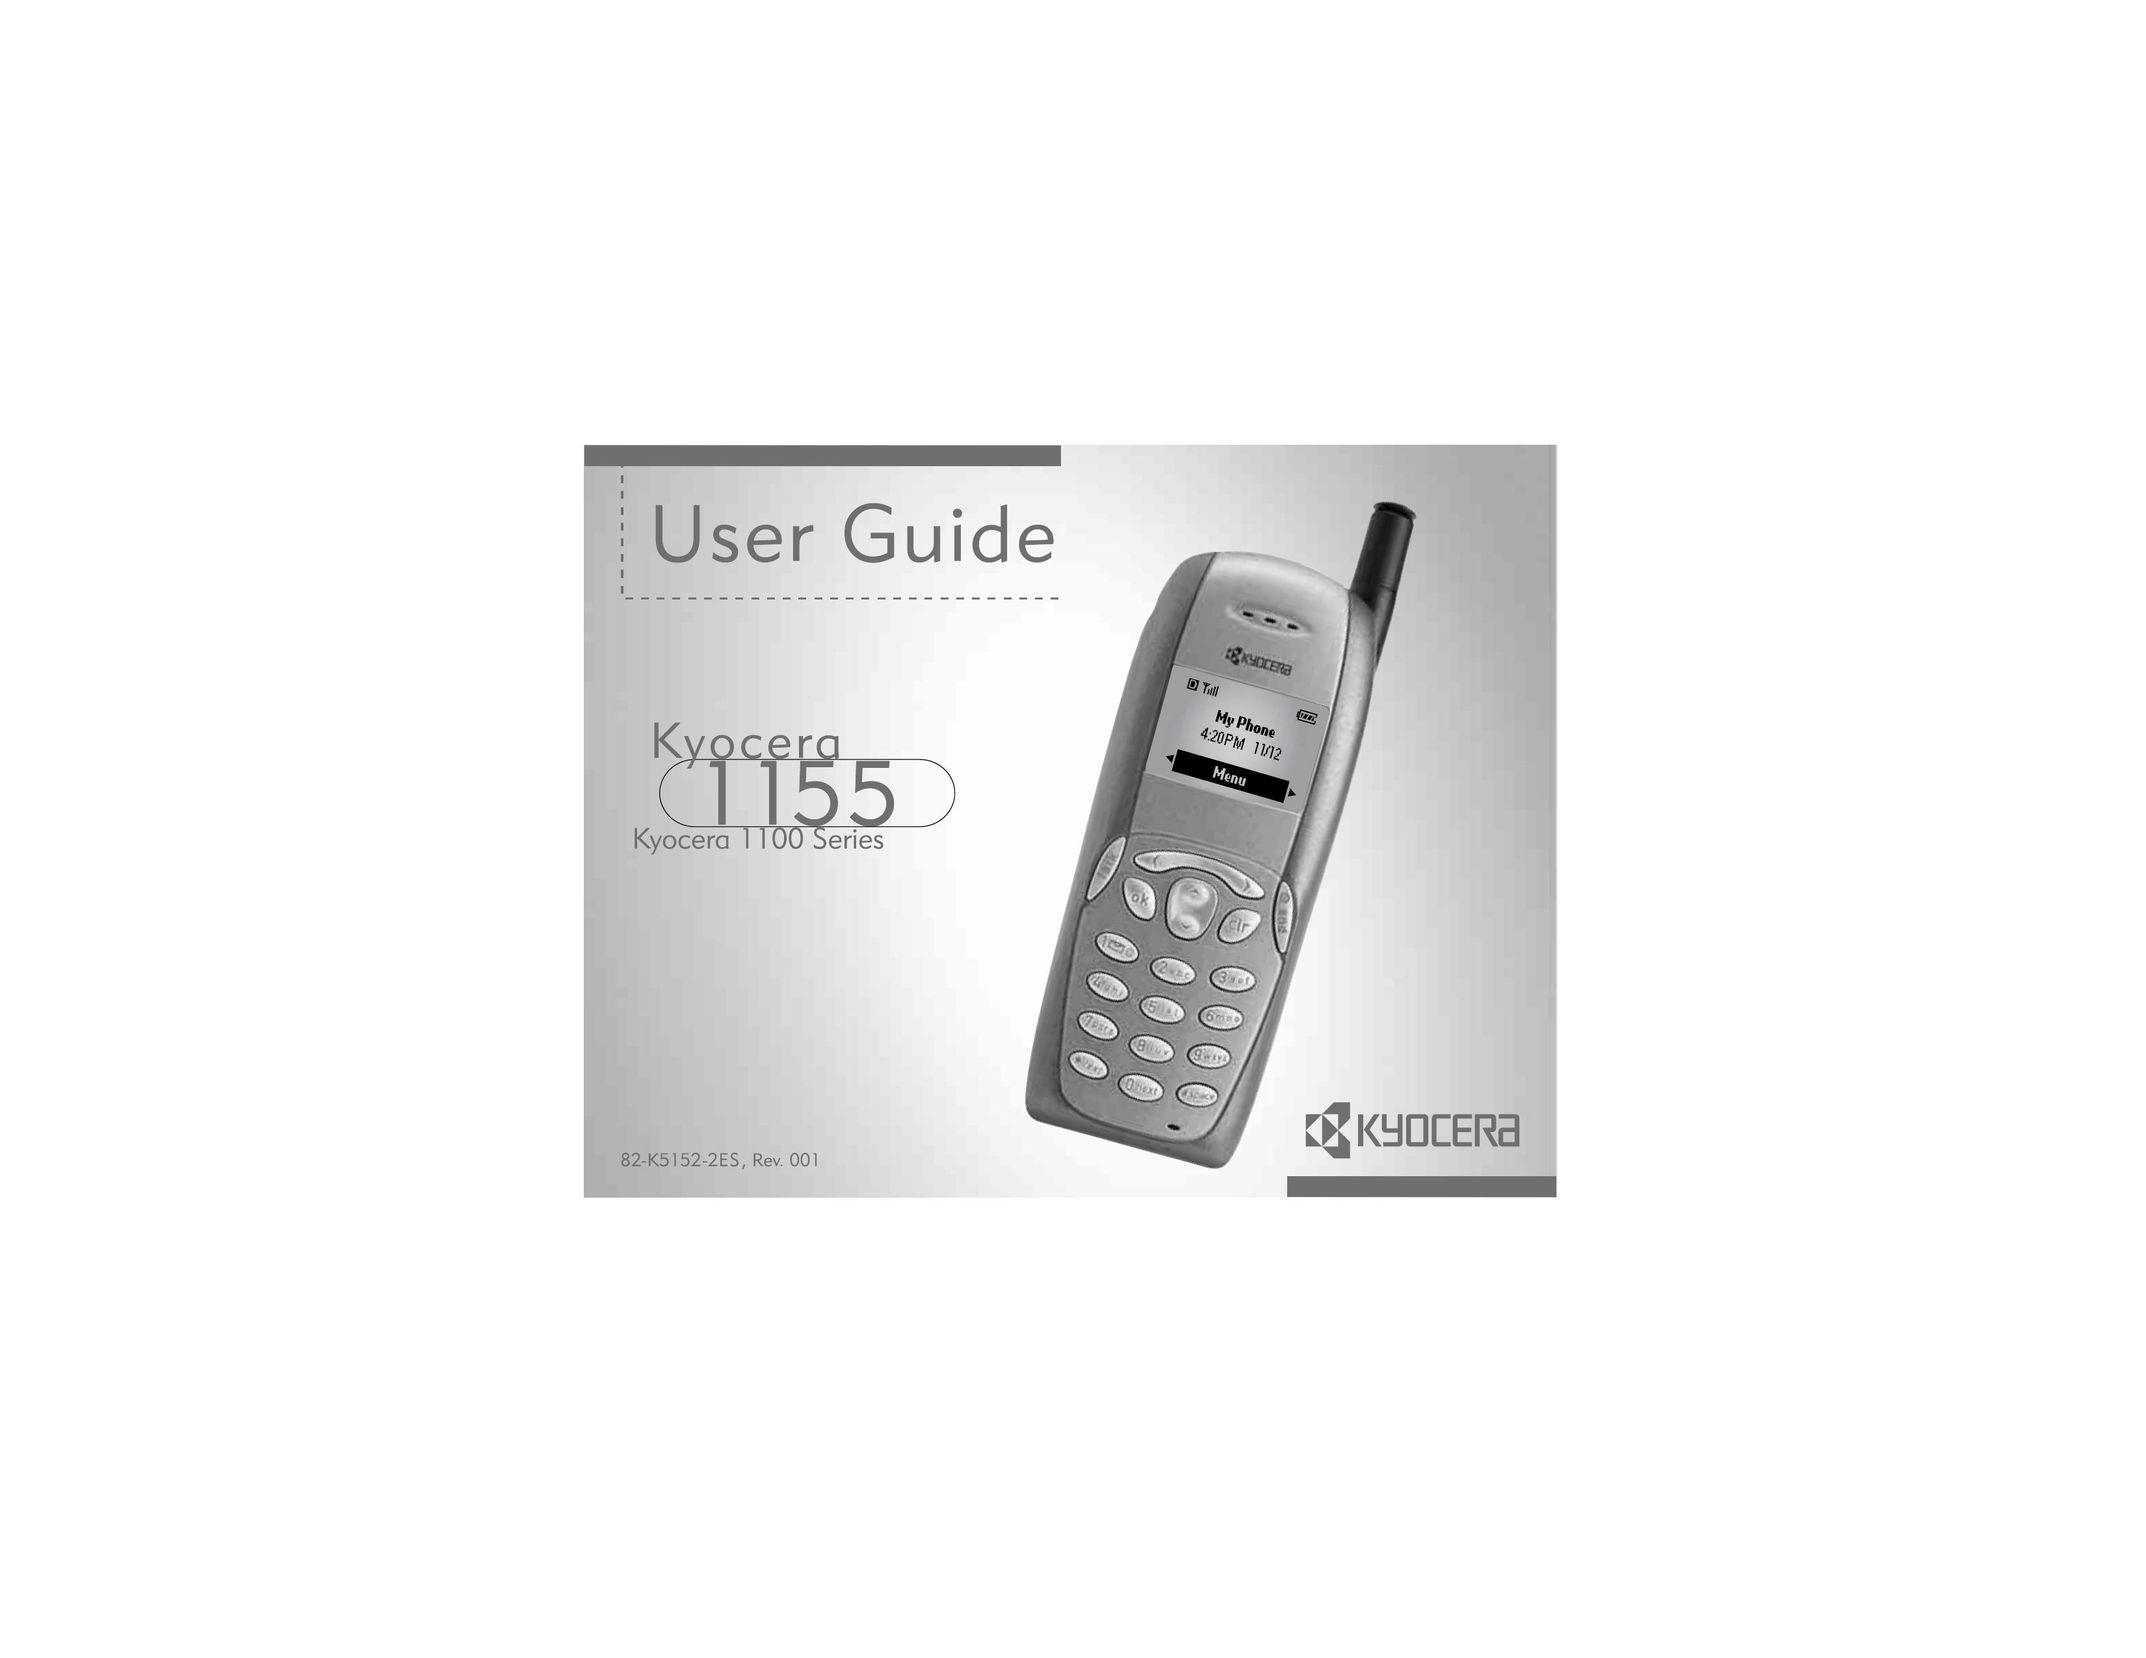 Kyocera 1155 Amplified Phone User Manual